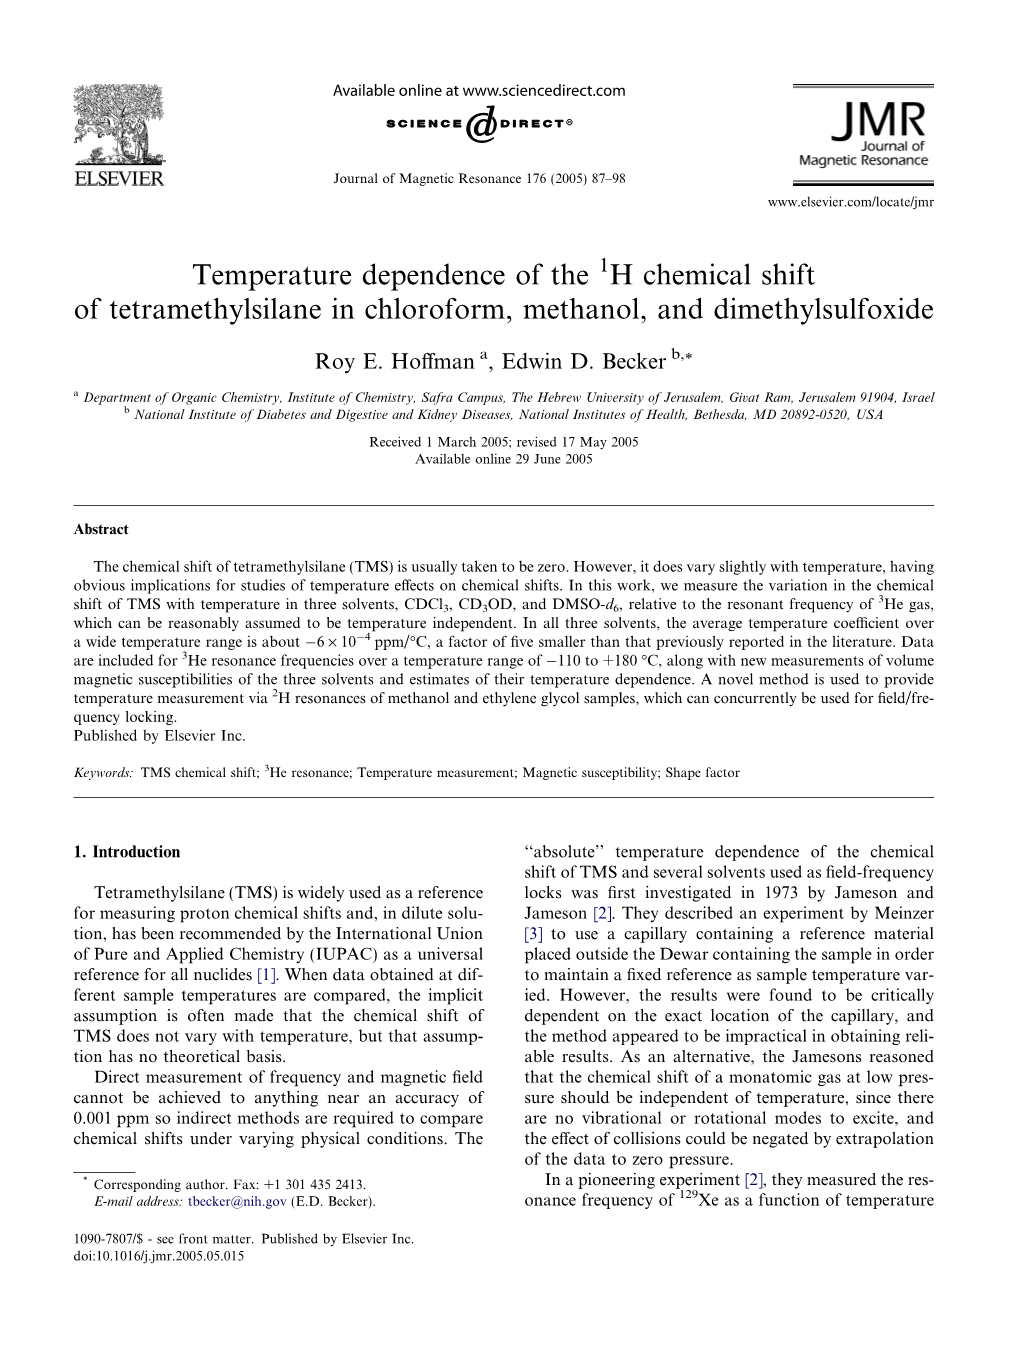 H Chemical Shift of Tetramethylsilane in Chloroform, Methanol, and Dimethylsulfoxide